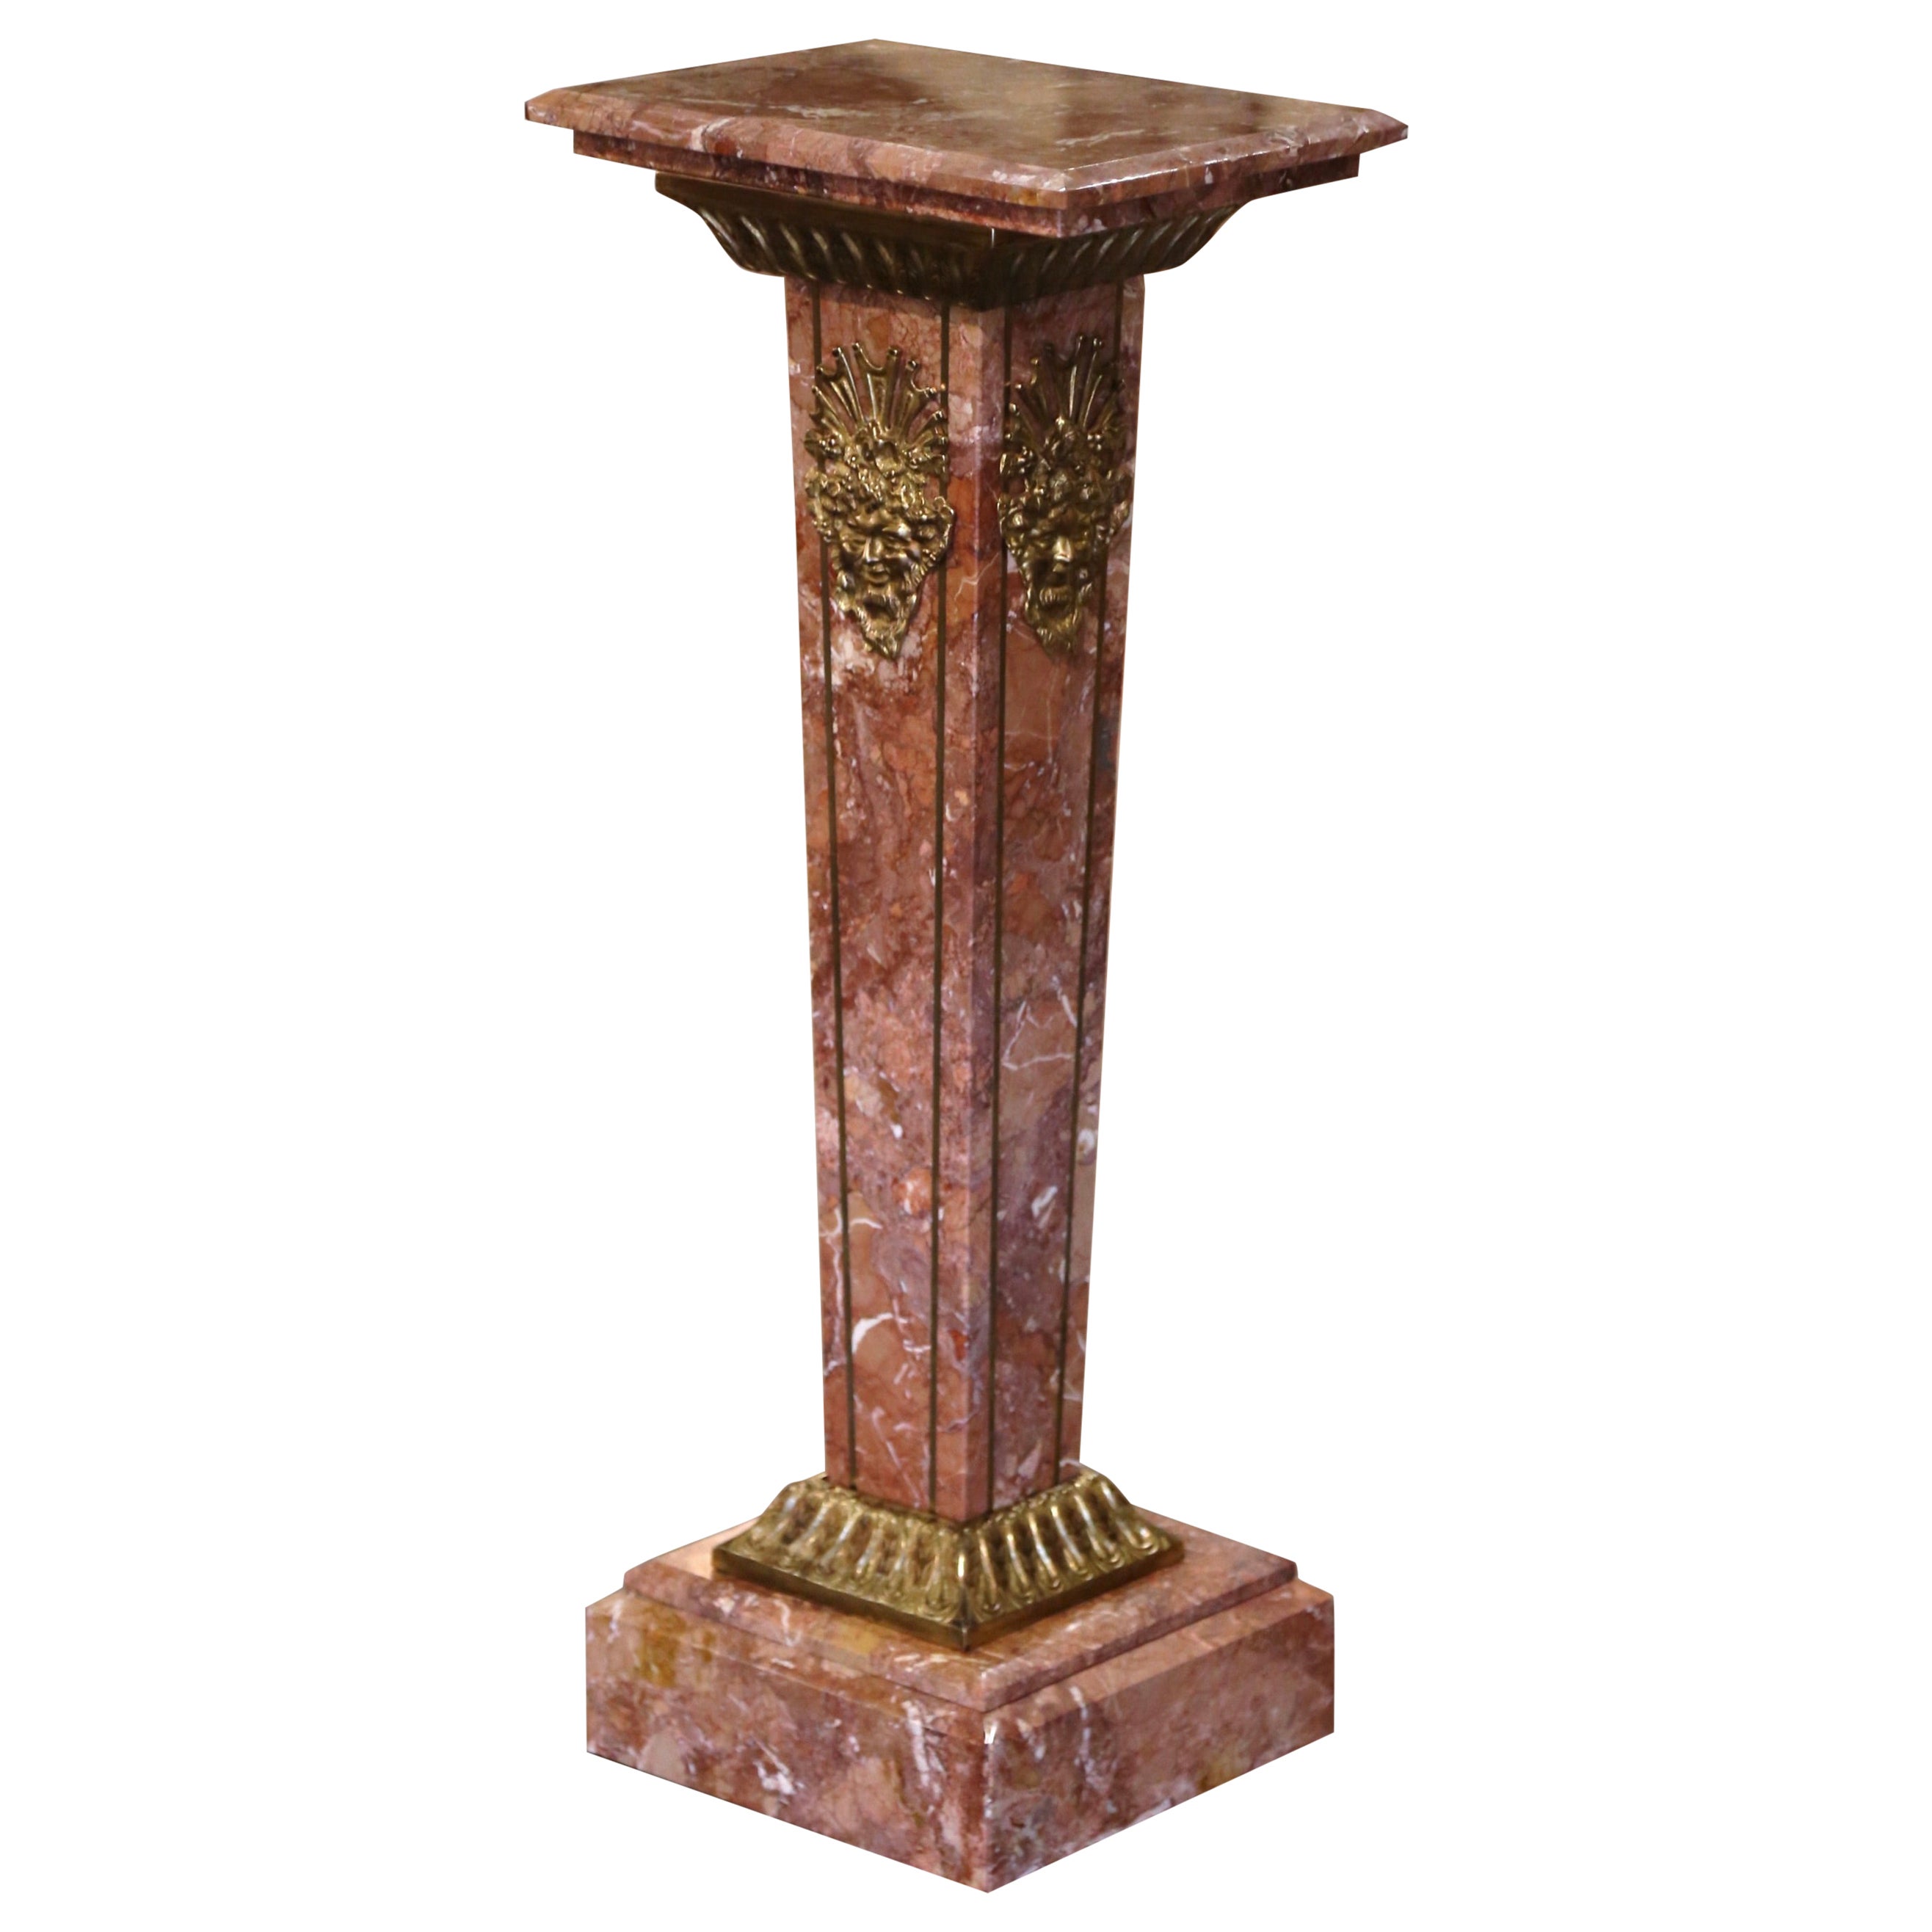 Vintage French Gilt Bronze-Mounted Carved Marble "Selette" Pedestal Table